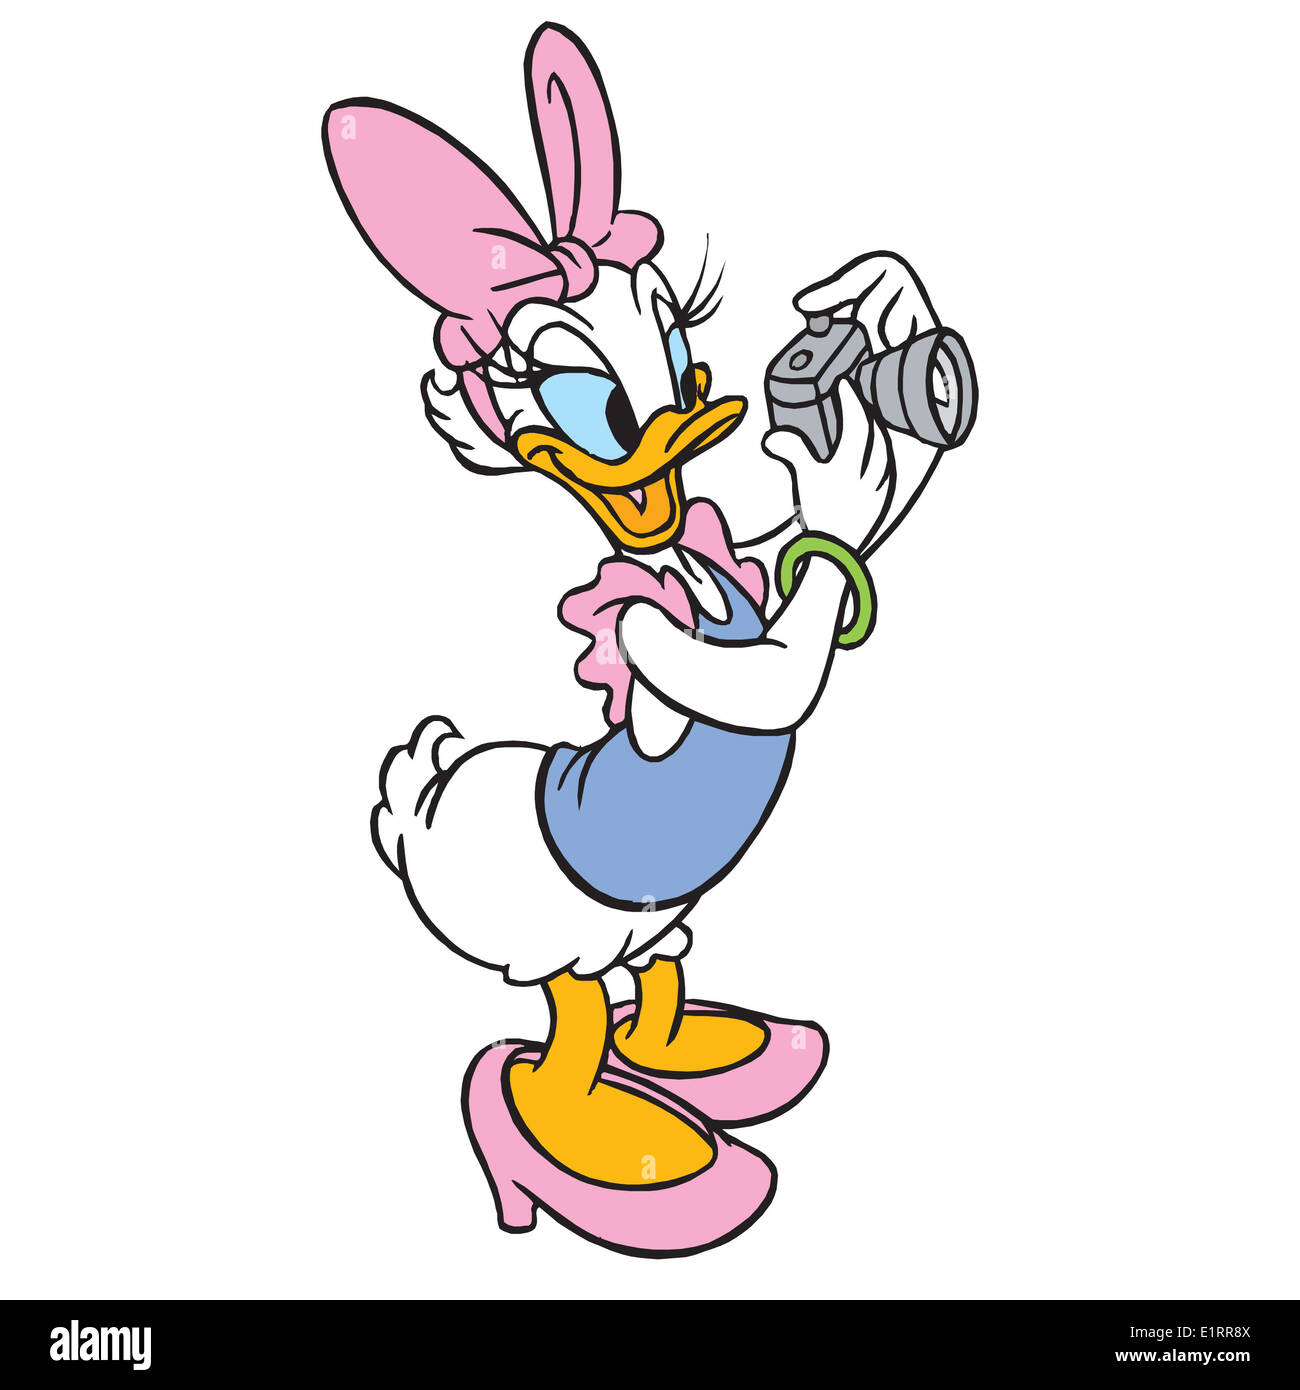 Daisy duck vector illustration Stock Photo - Alamy